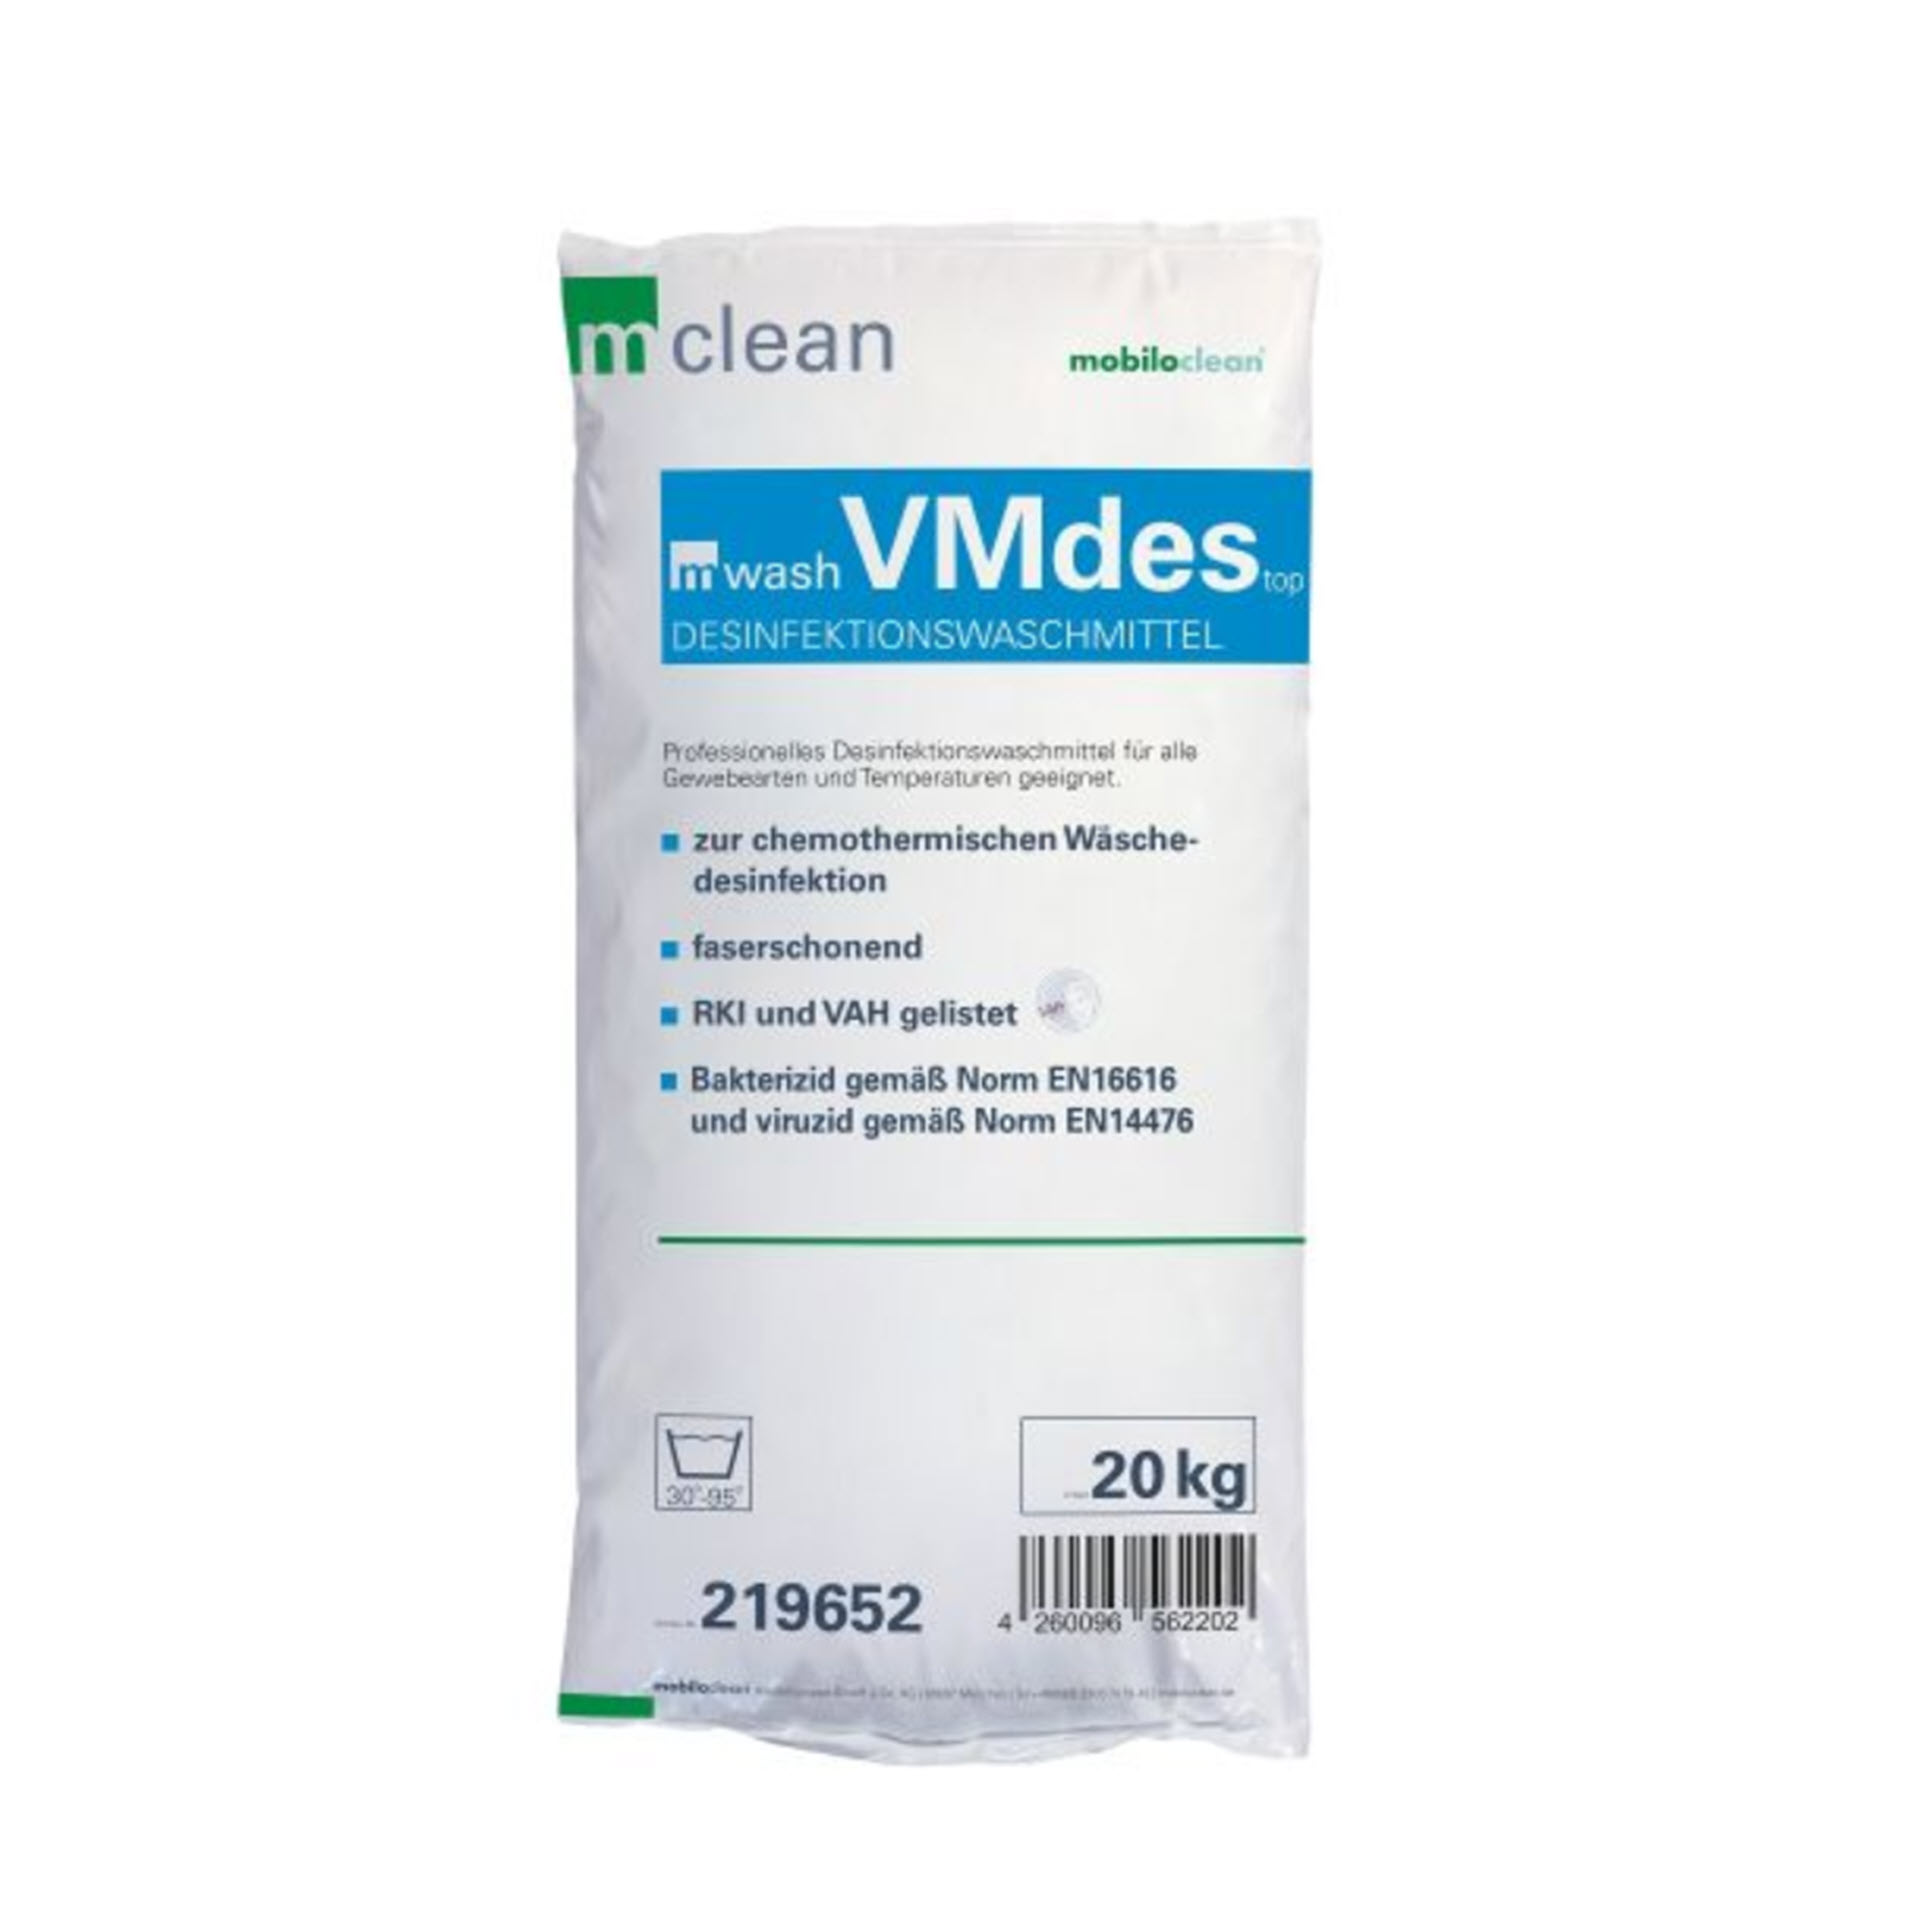 Mobiloclean mwash VMdes top Desinfektionswaschmittel 20 kg Sack